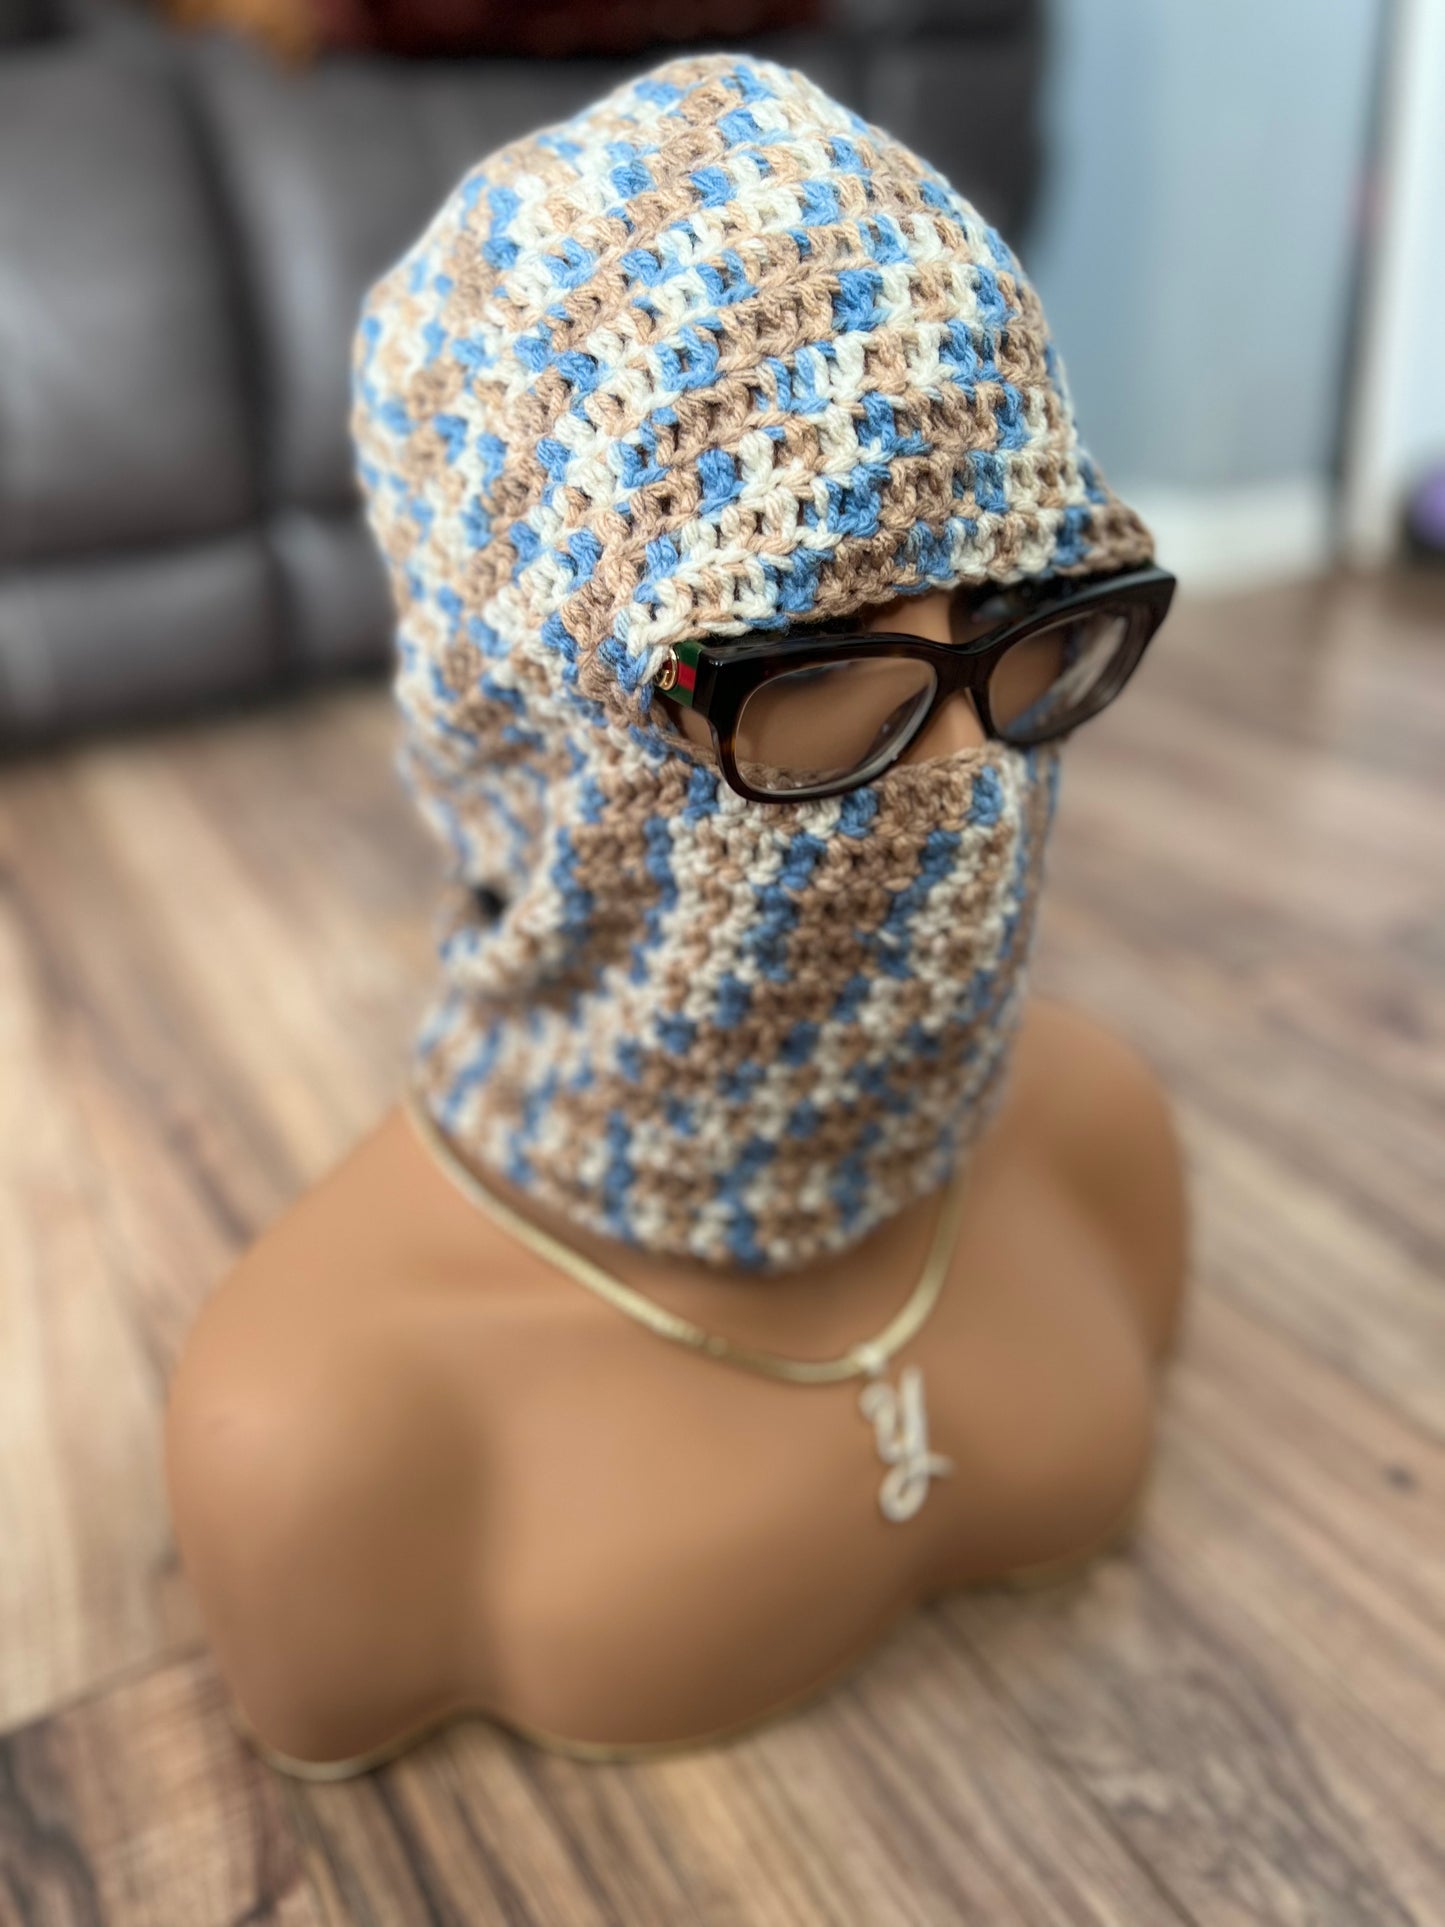 Crochet Ski Mask